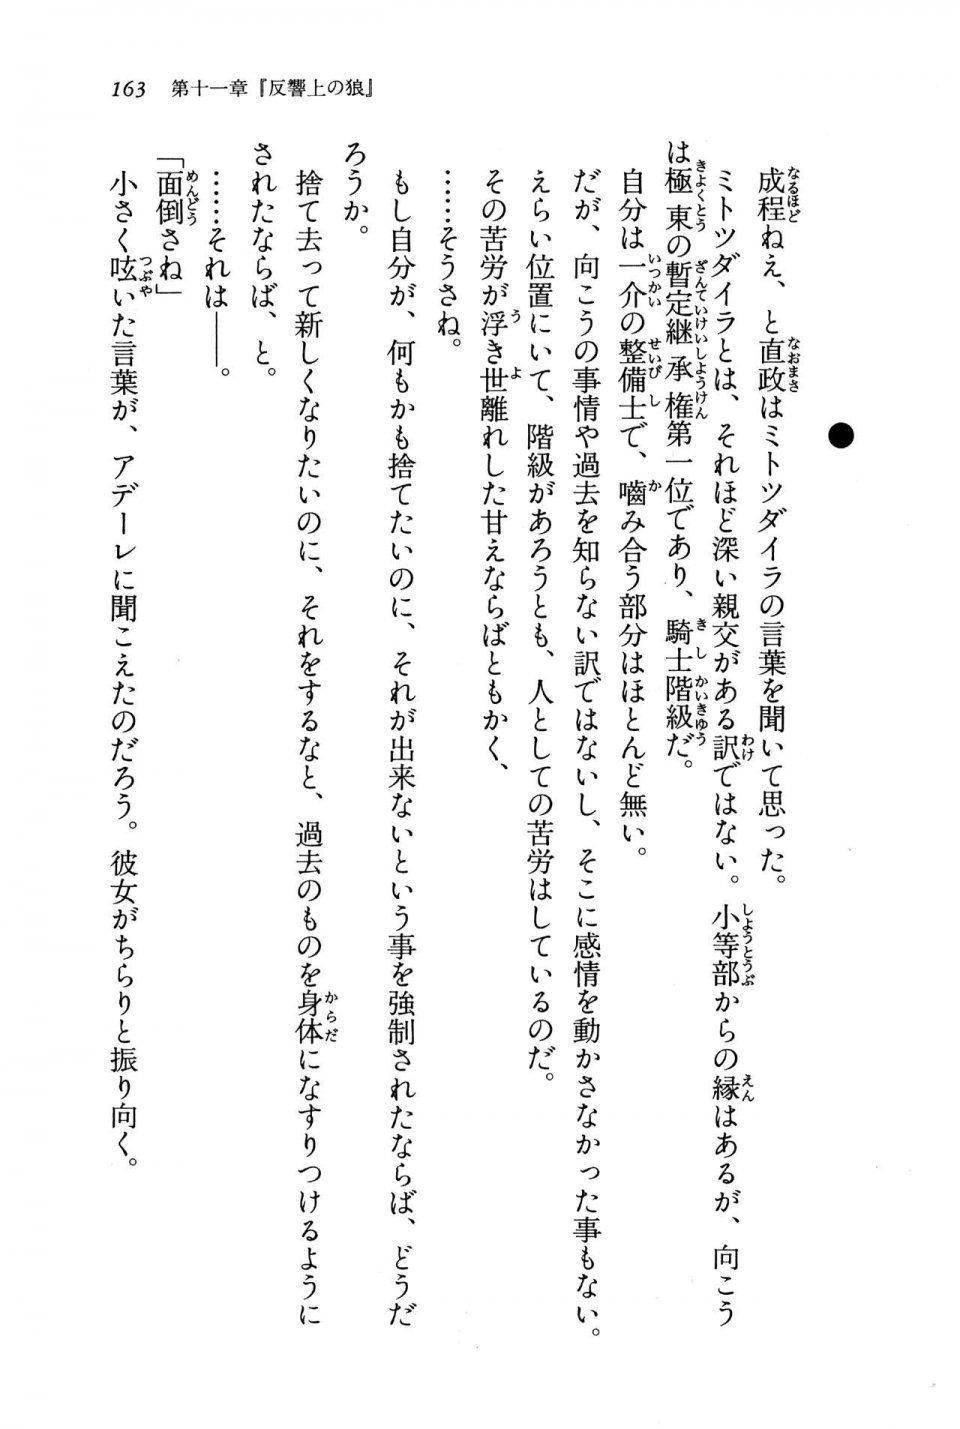 Kyoukai Senjou no Horizon BD Special Mininovel Vol 8(4B) - Photo #167